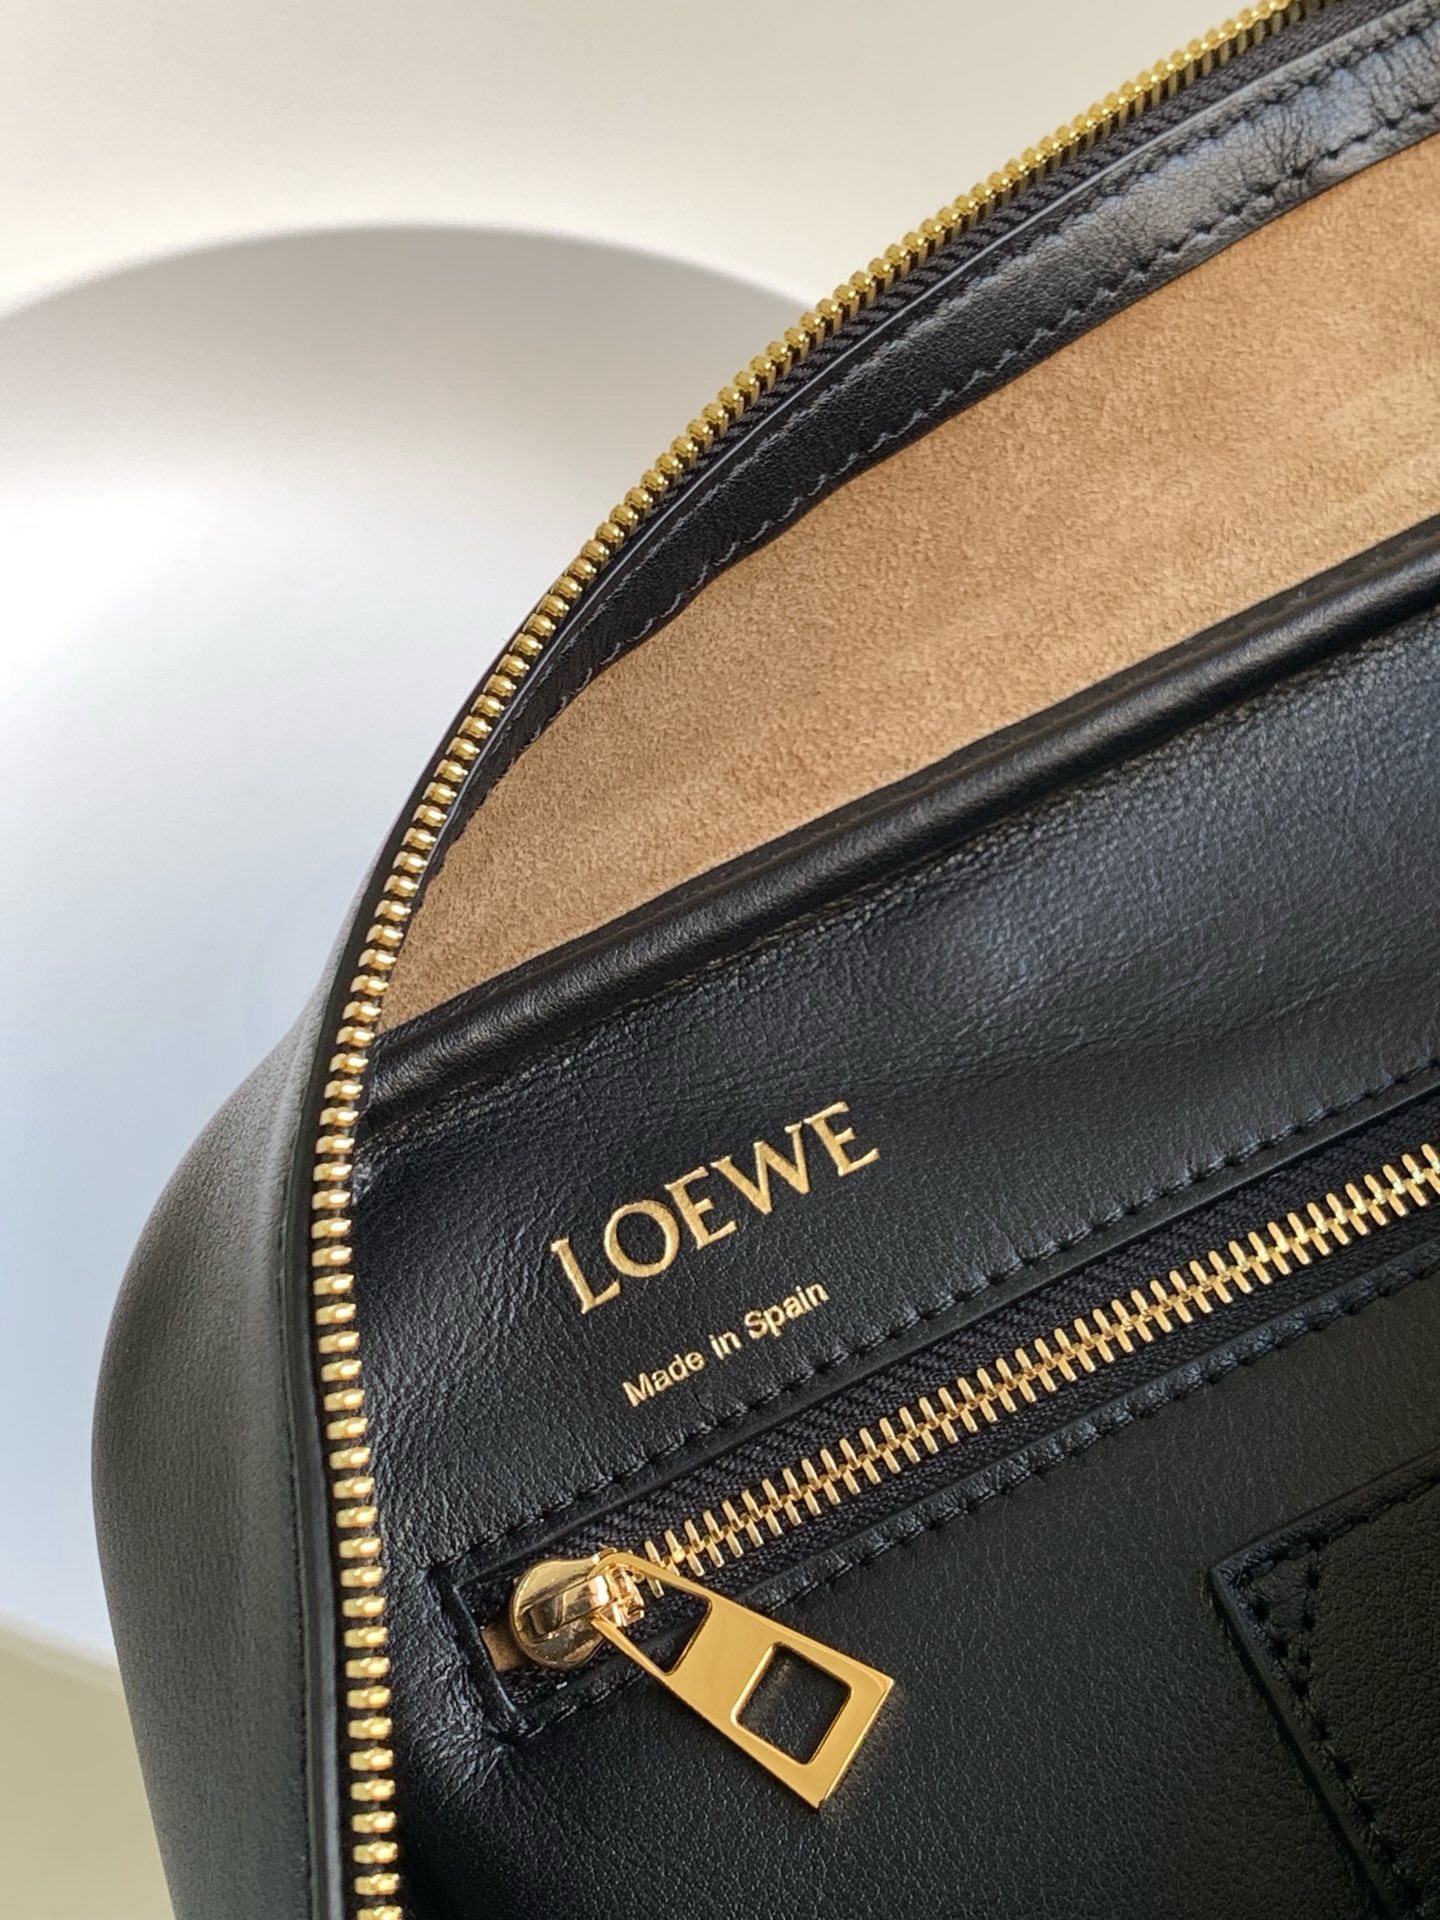 Loewe Original Leather tote A652388 black